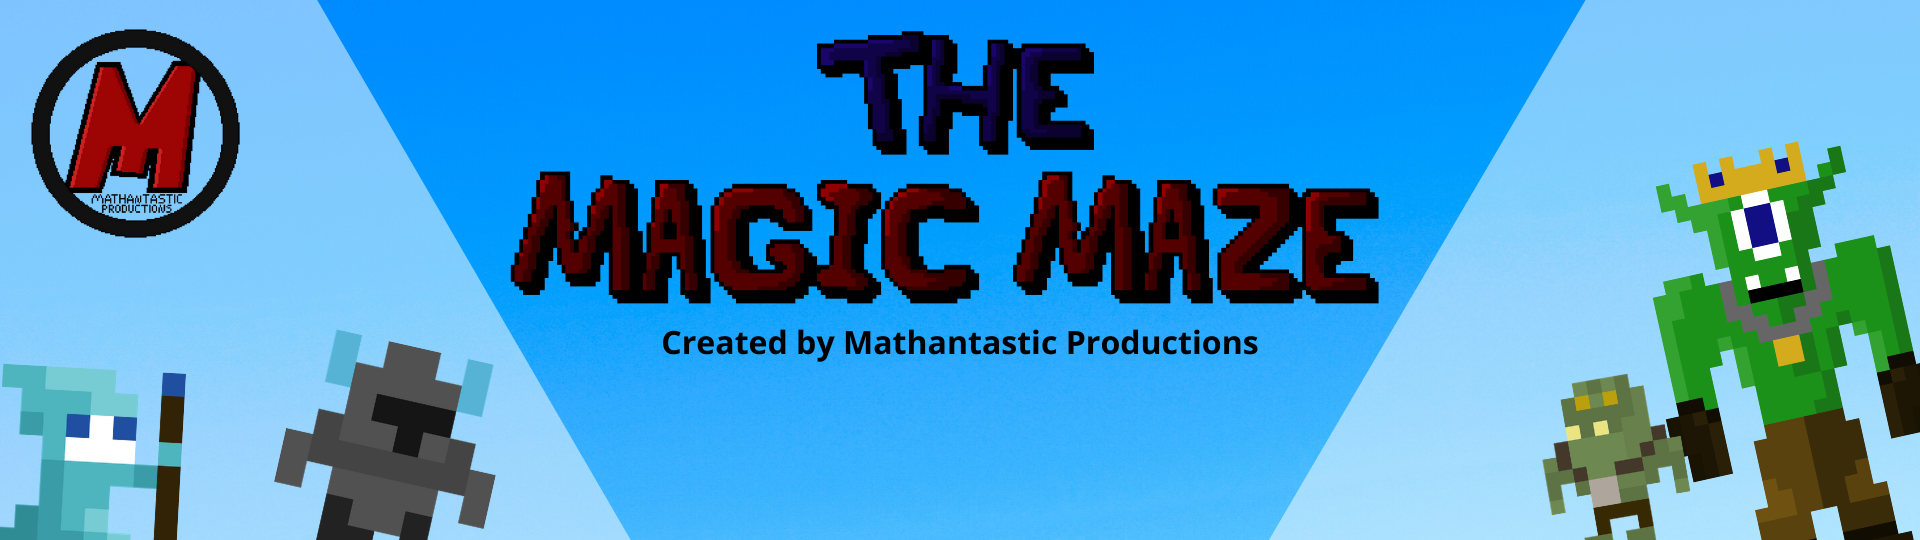 The Magic Maze